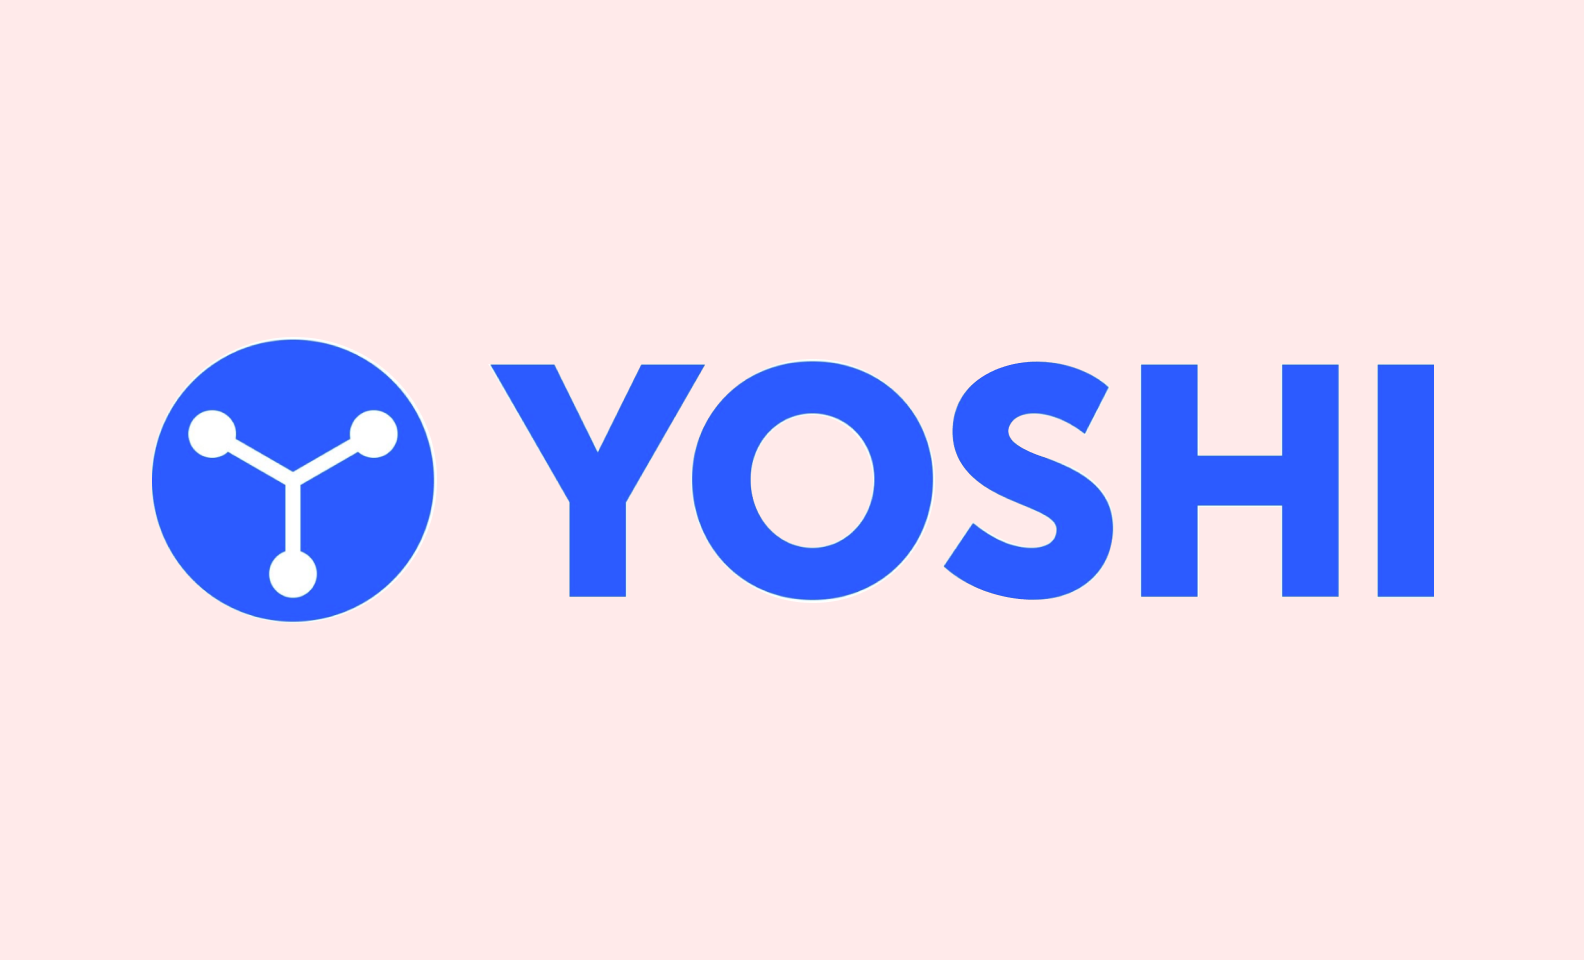 Blue capital letters YOSHI